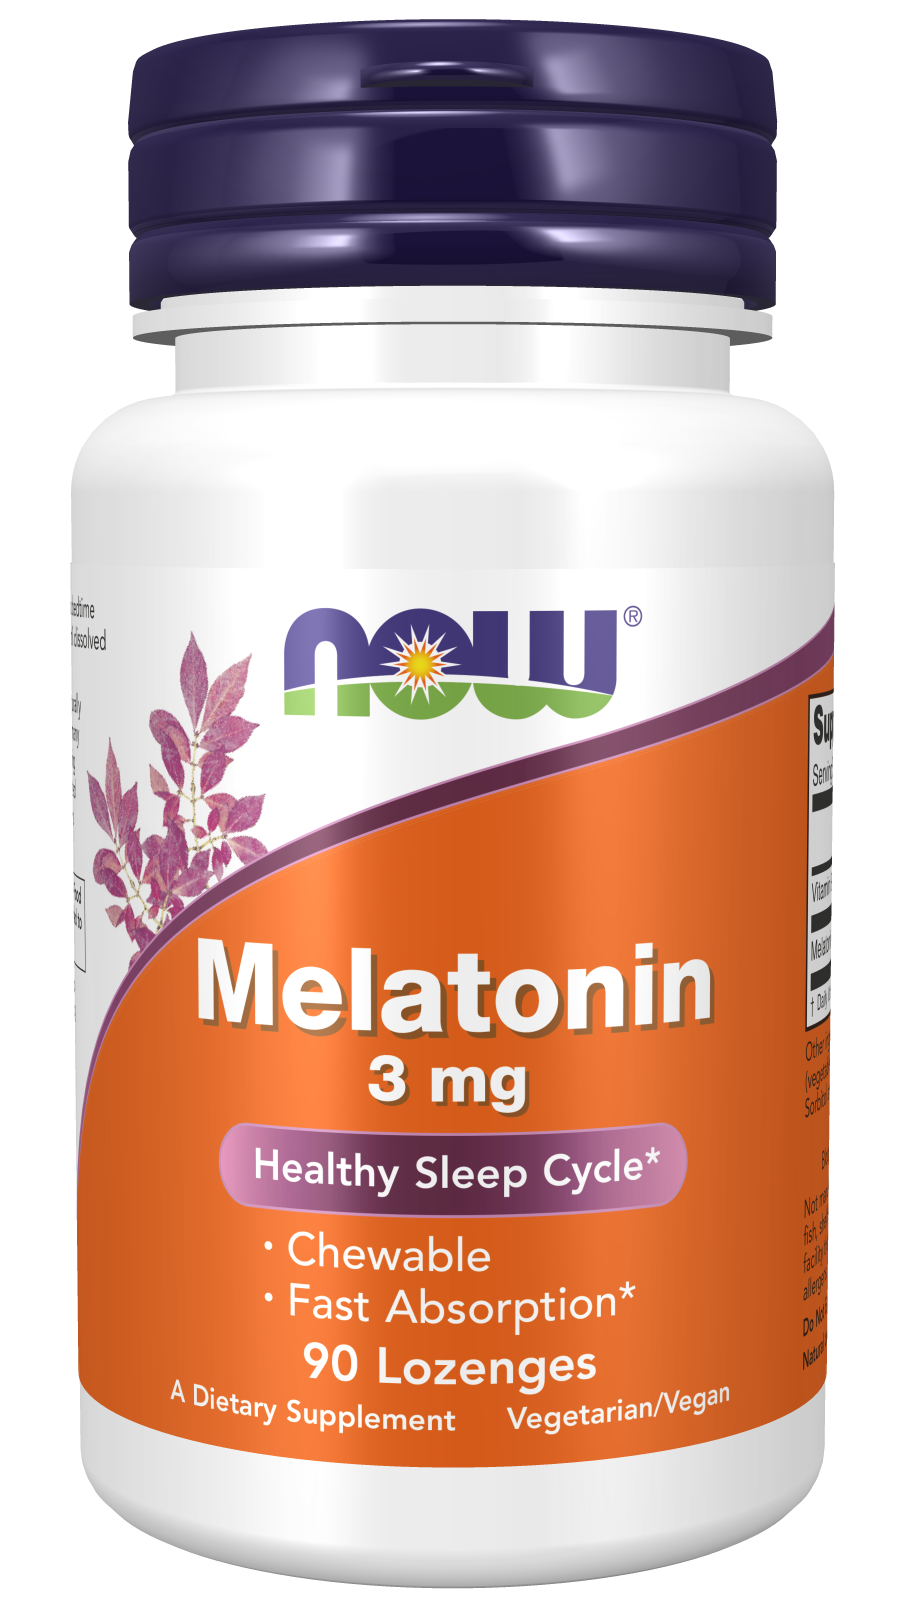 Melatonin 3 mg Chewable - 90 Lozenges Bottle Front